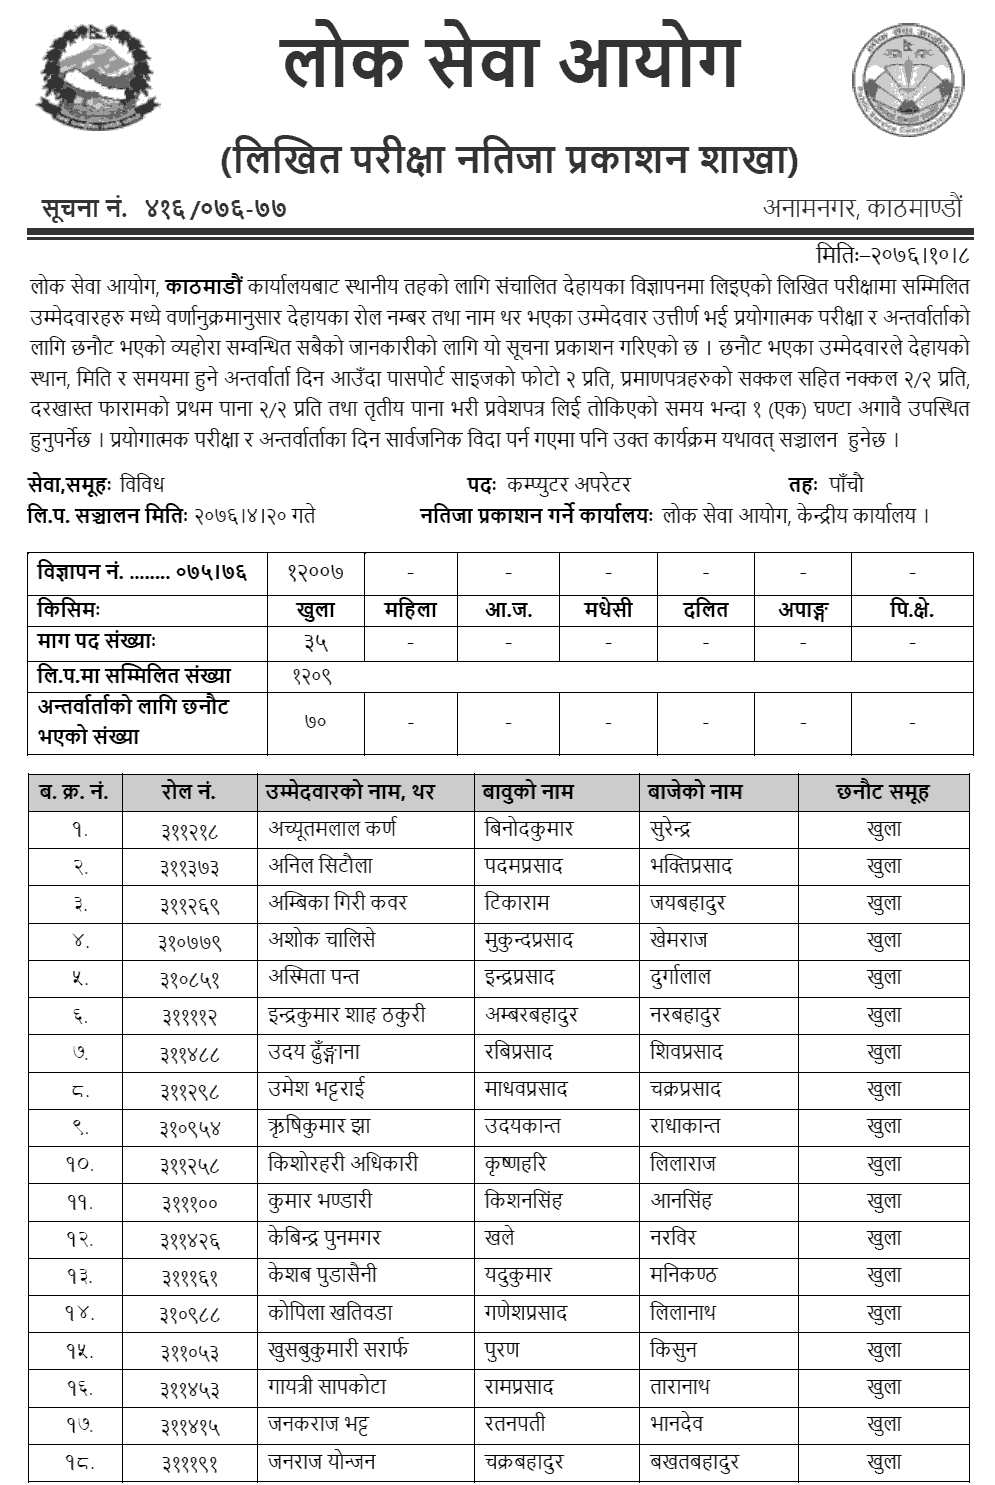 Lok Sewa Aayog Kathmandu Local Level 5th Computer Operator Written Exam Result